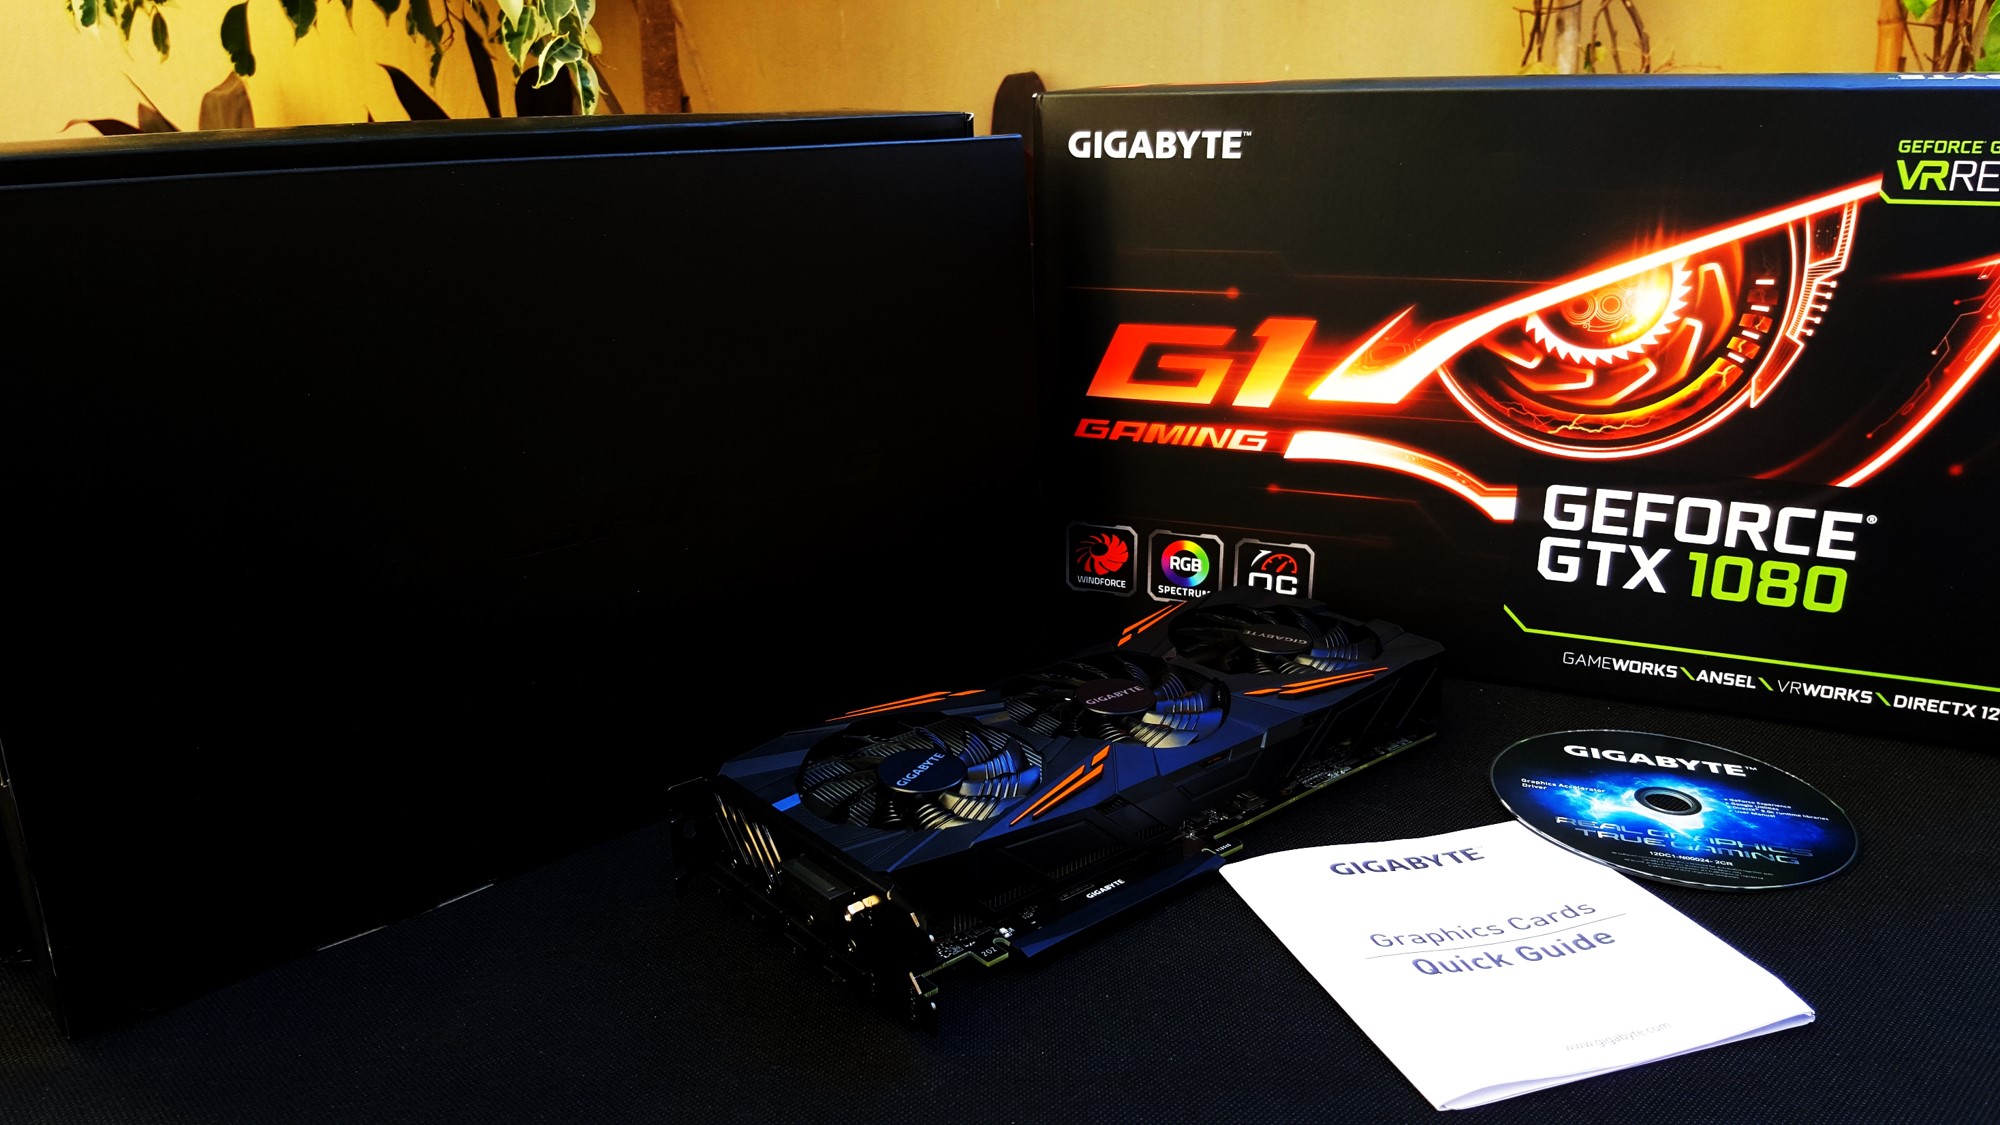 Gigabyte geforce gtx 1080 gaming. Gigabyte GTX 1080 8gb. GTX 1080 8gb Gigabyte Gaming. GTX 1080 Gigabyte g1 Gaming. Gigabyte GTX 1080 g1 Gaming Размеры термопрокладок.